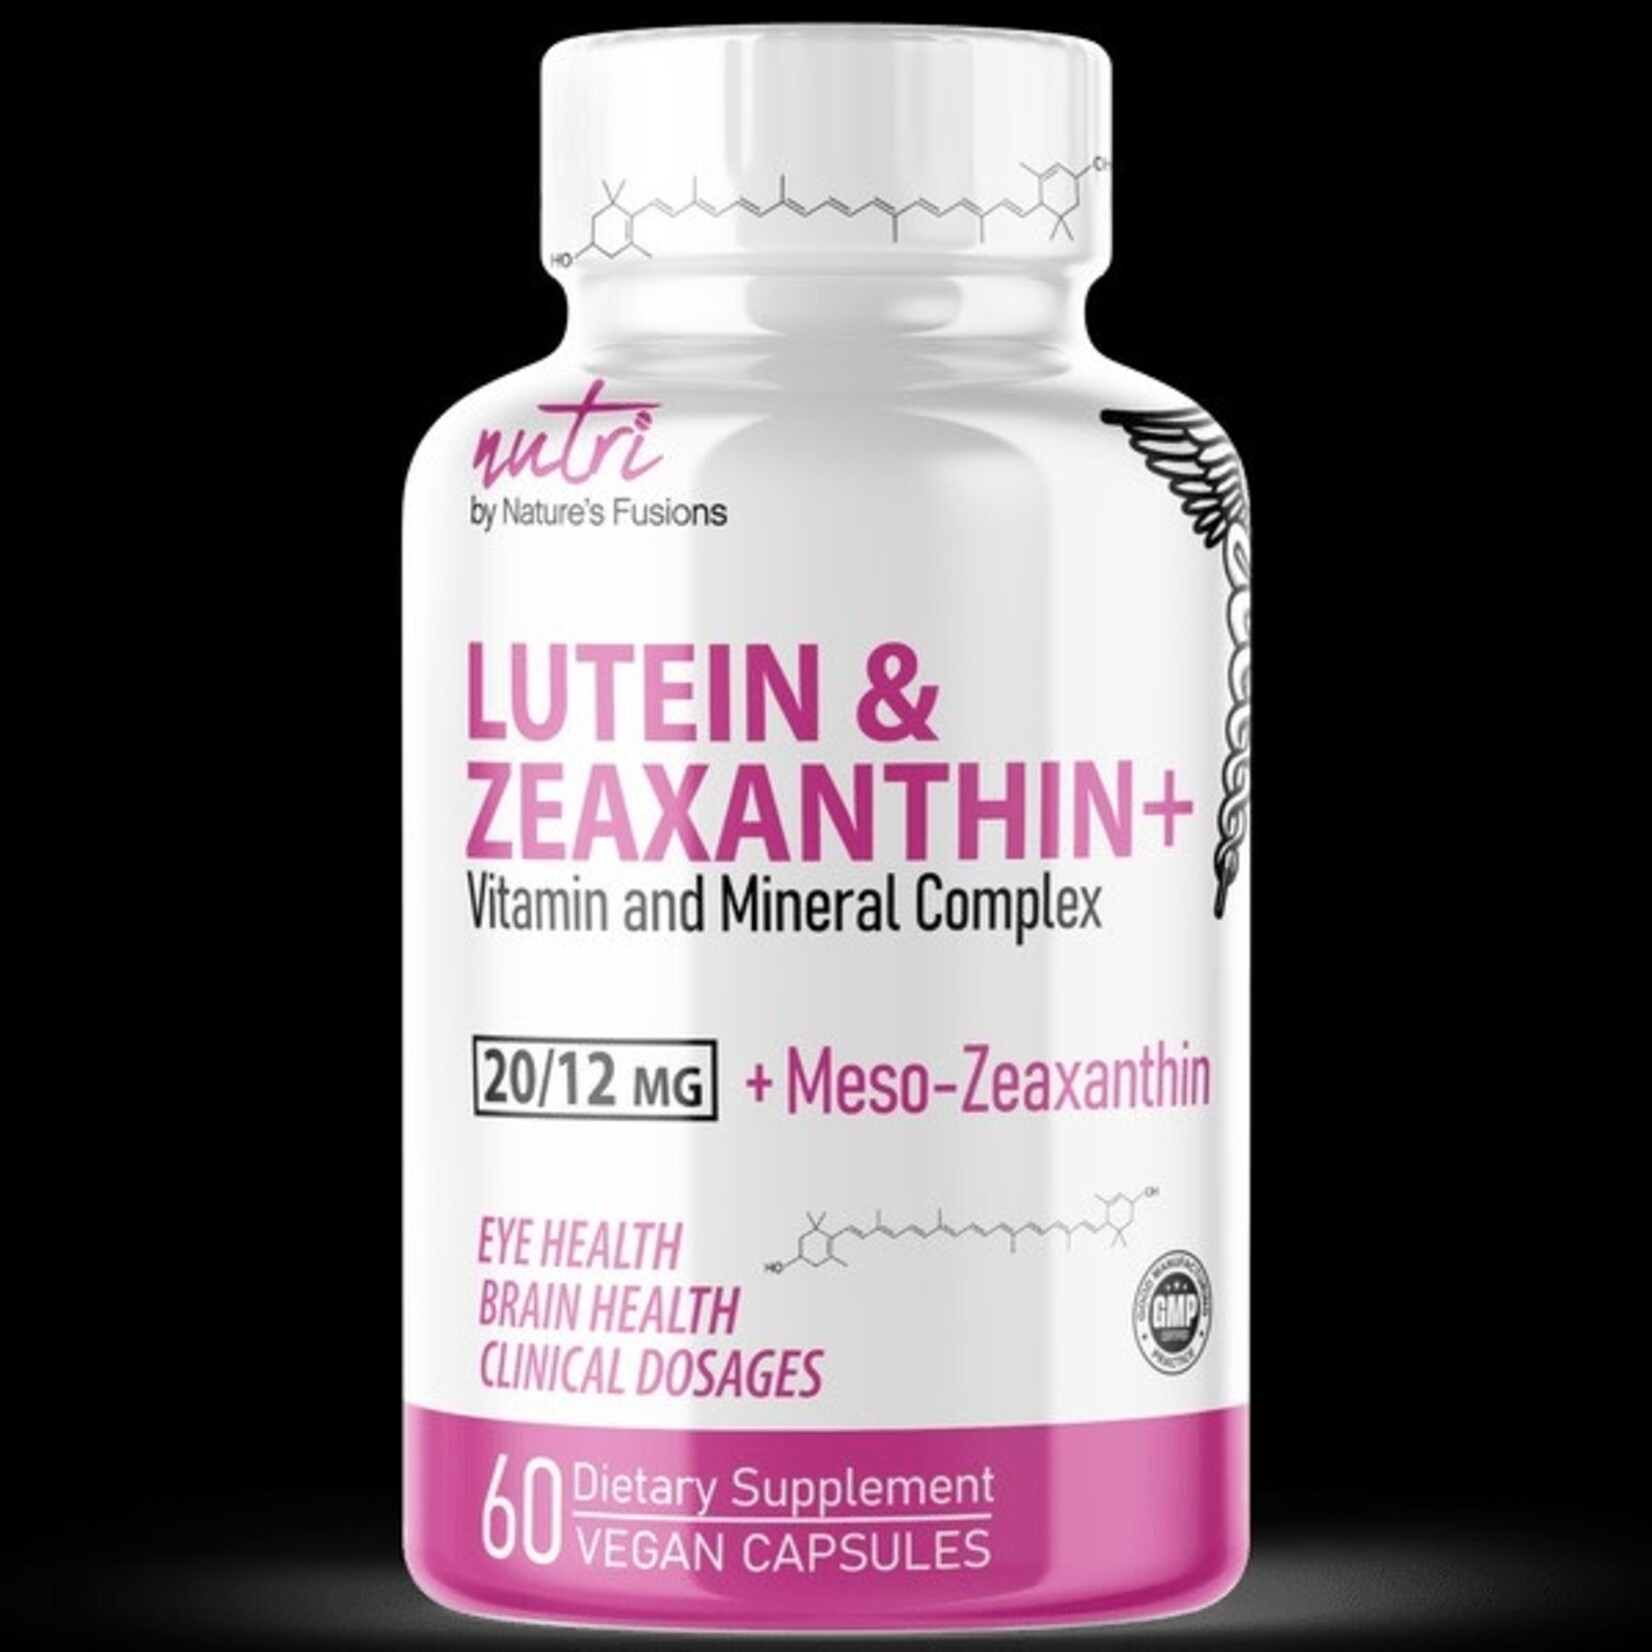 Natures Fusion Nutri Lutein & Zeaxanthin+ 20/12mg 60 Vegan Capsules